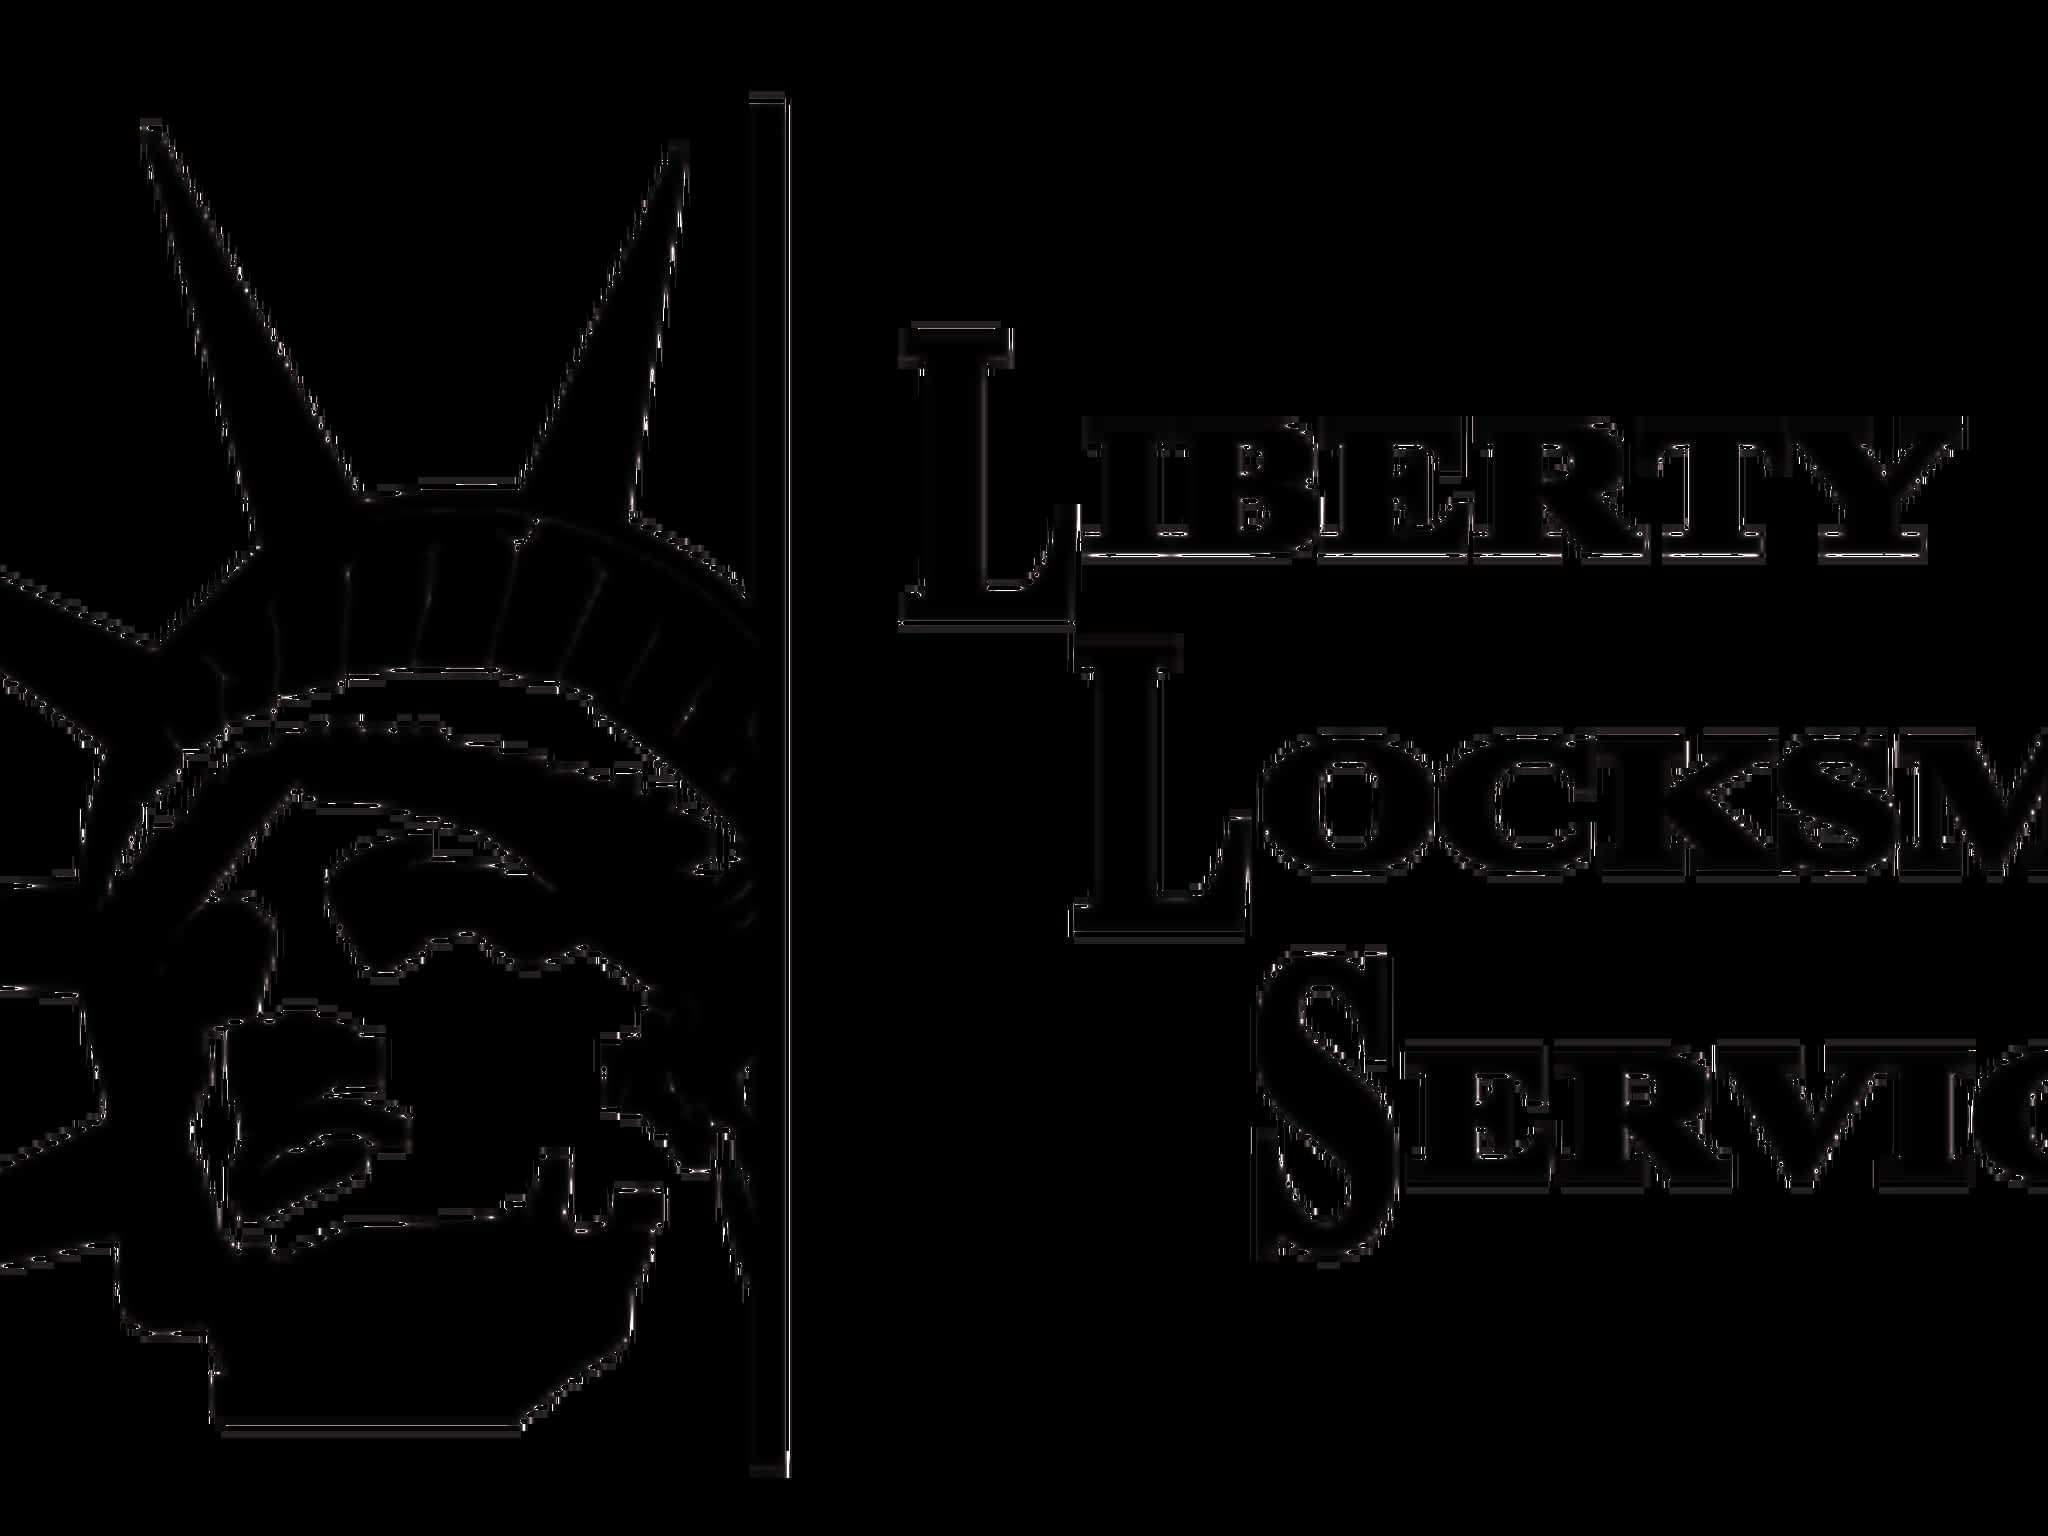 photo Liberty Locksmith Services